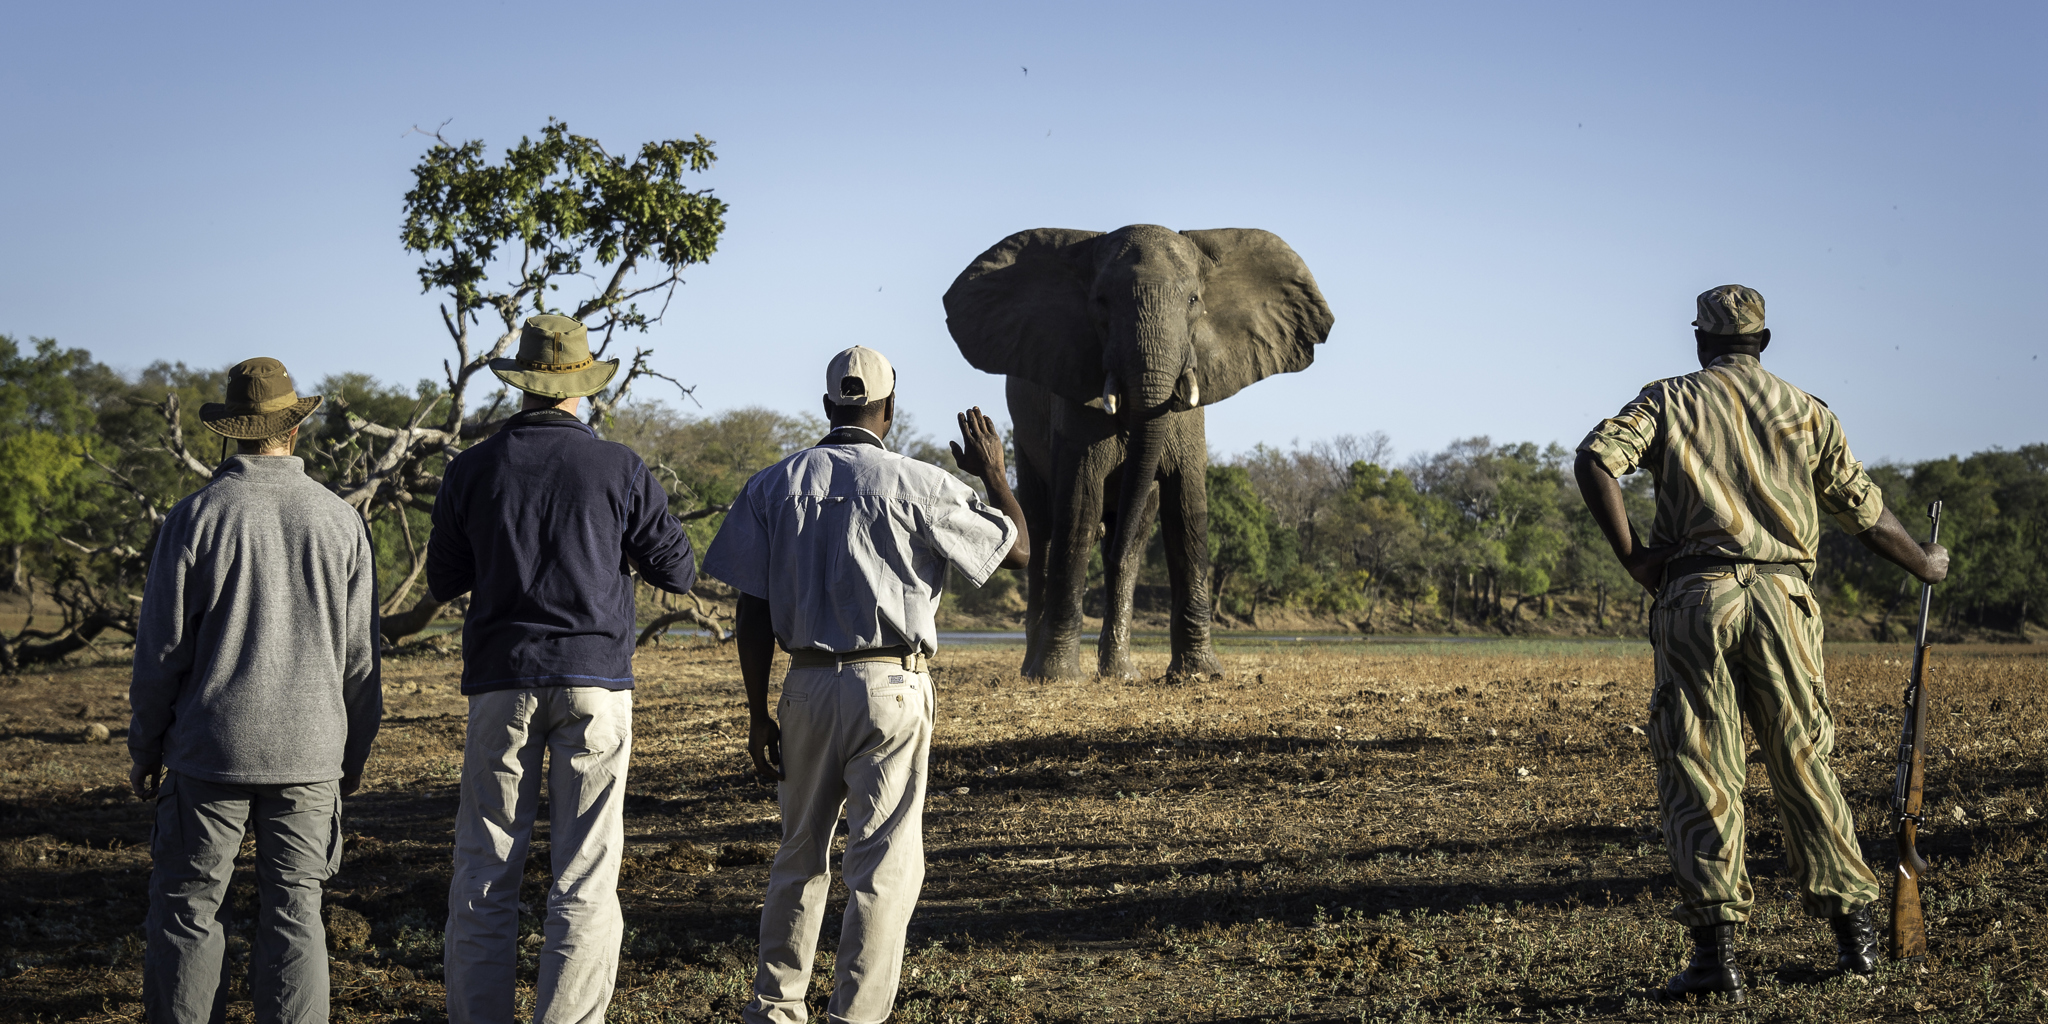 walking safari elephant encounter, zambia holidays